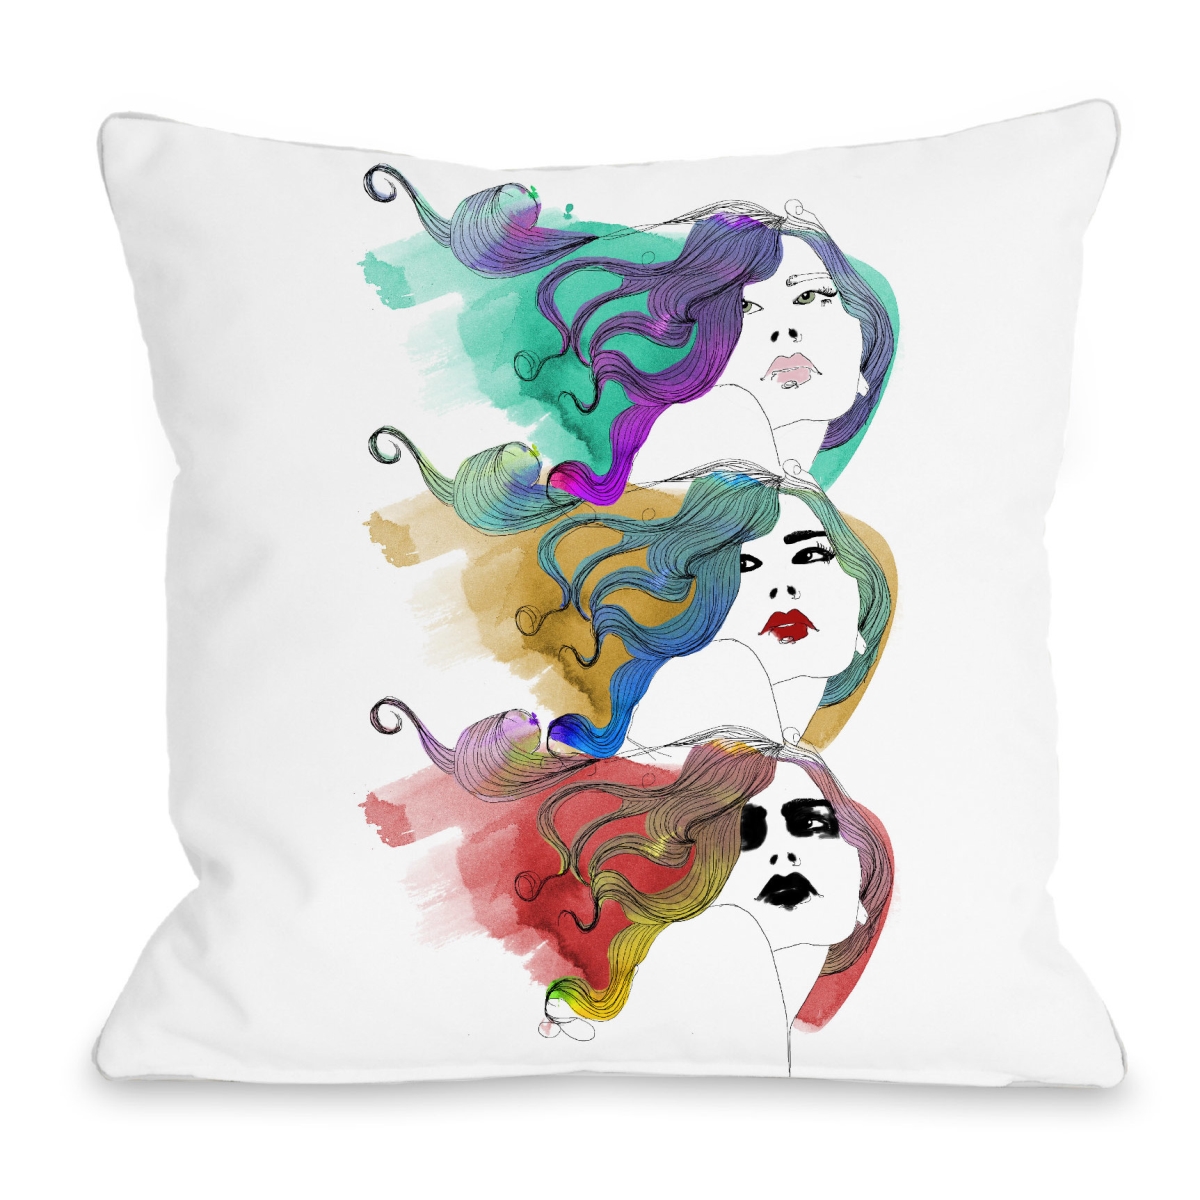 72942pl16 16 X 16 In. Mermaid Hair Pillow By Judit Garcia Talvera, White & Multicolor